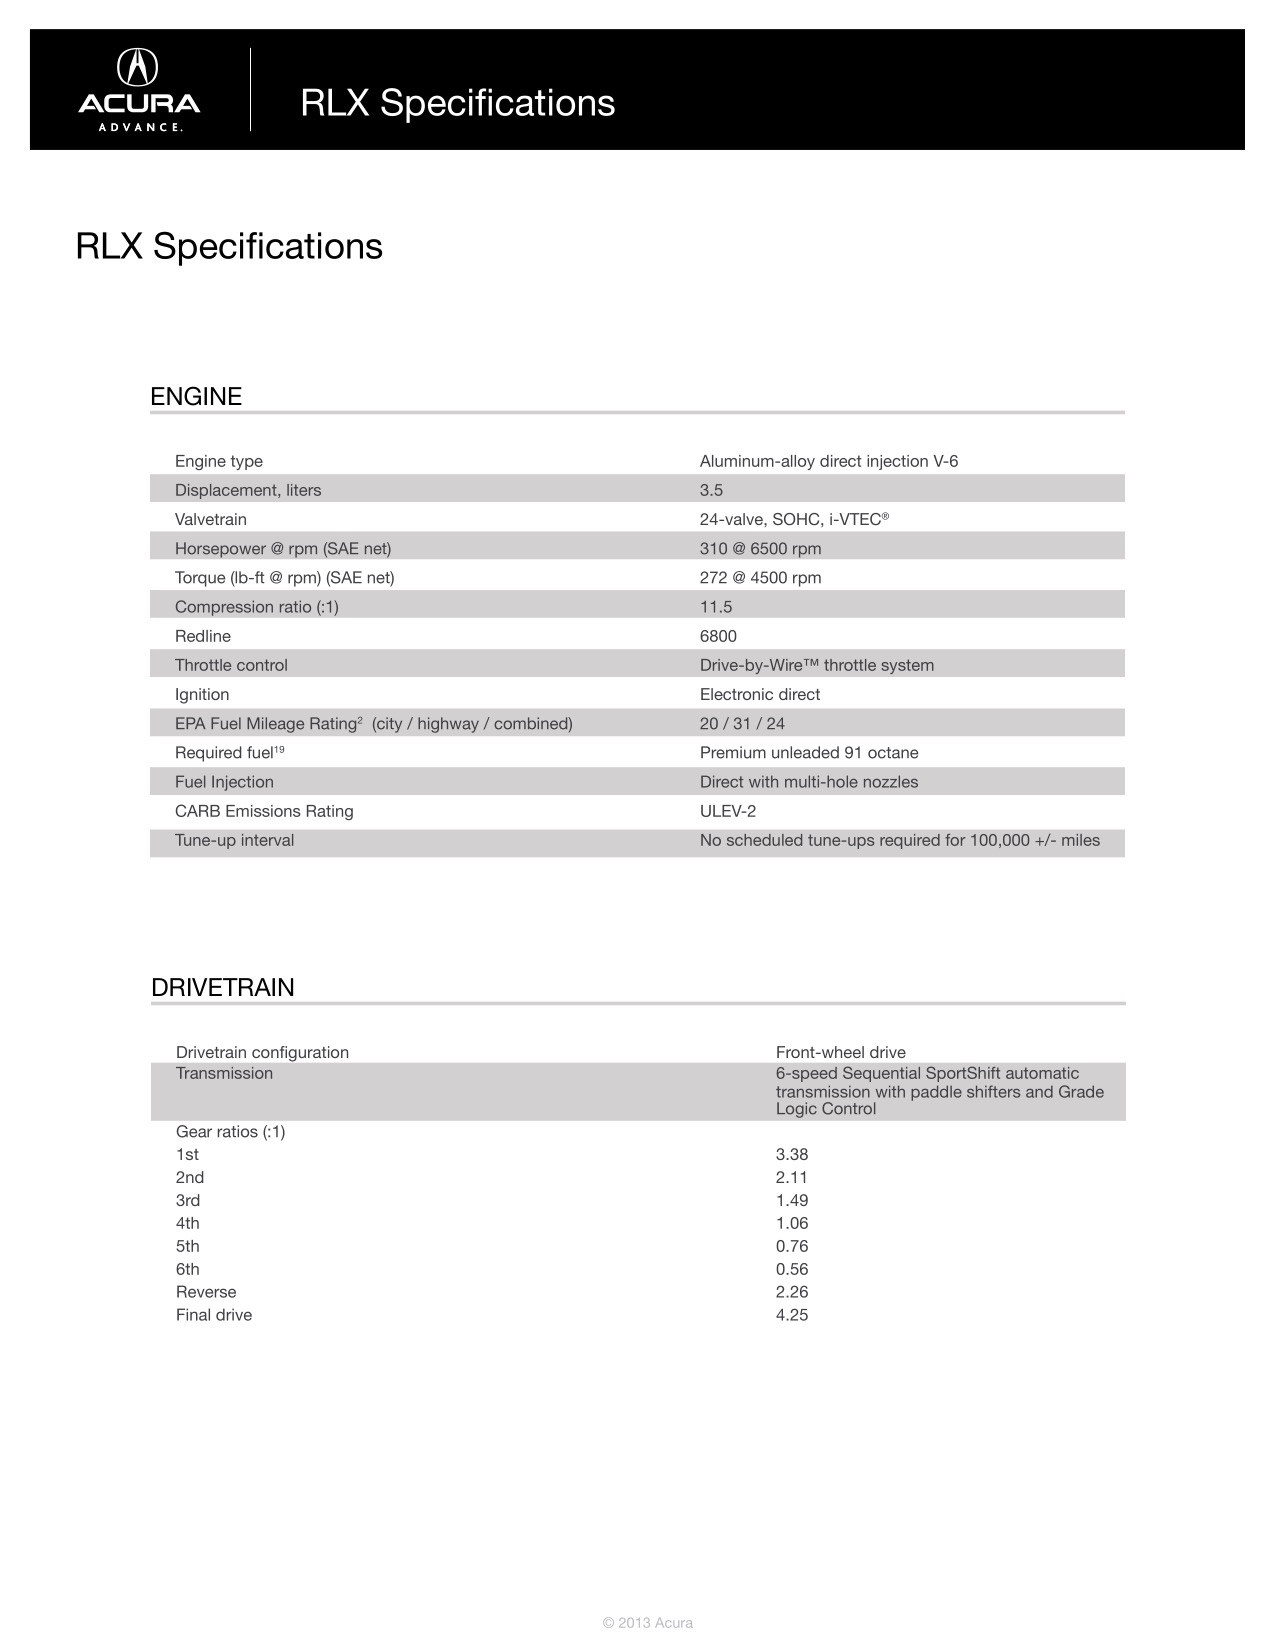 2014 Acura RLX Brochure Page 23